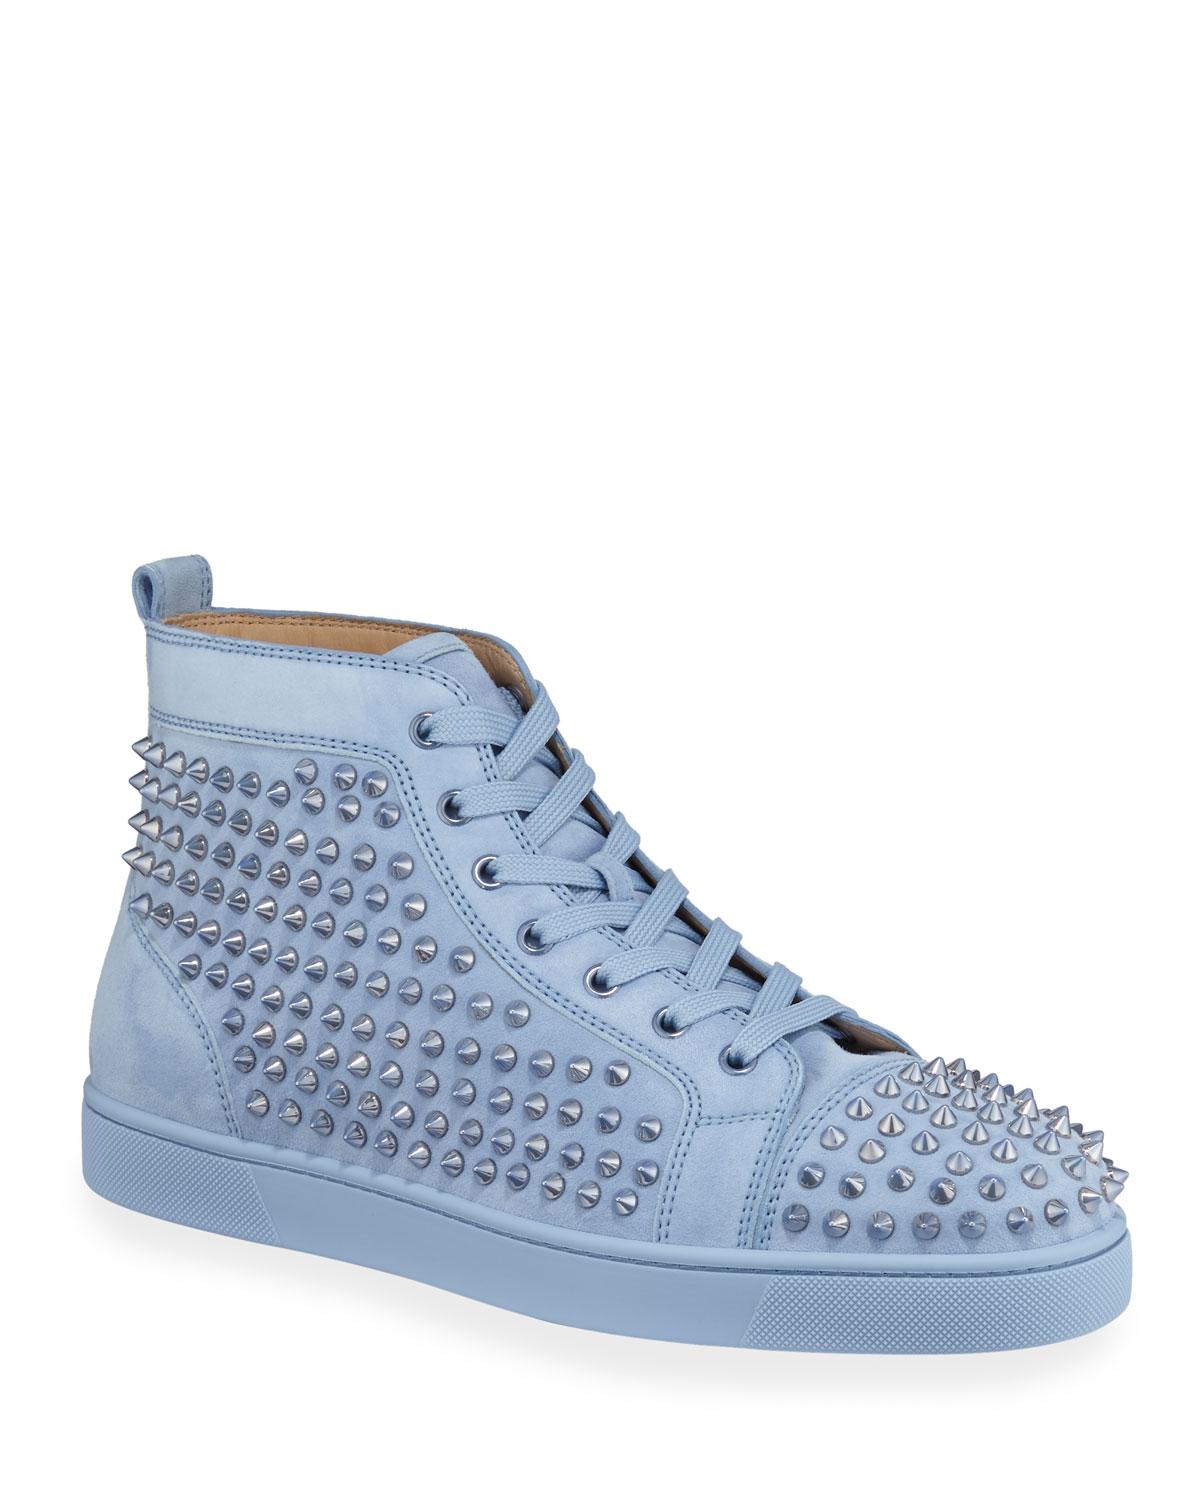 Christian Louboutin Men's Louis Spike-studded Suede Sneakers in Blue ...